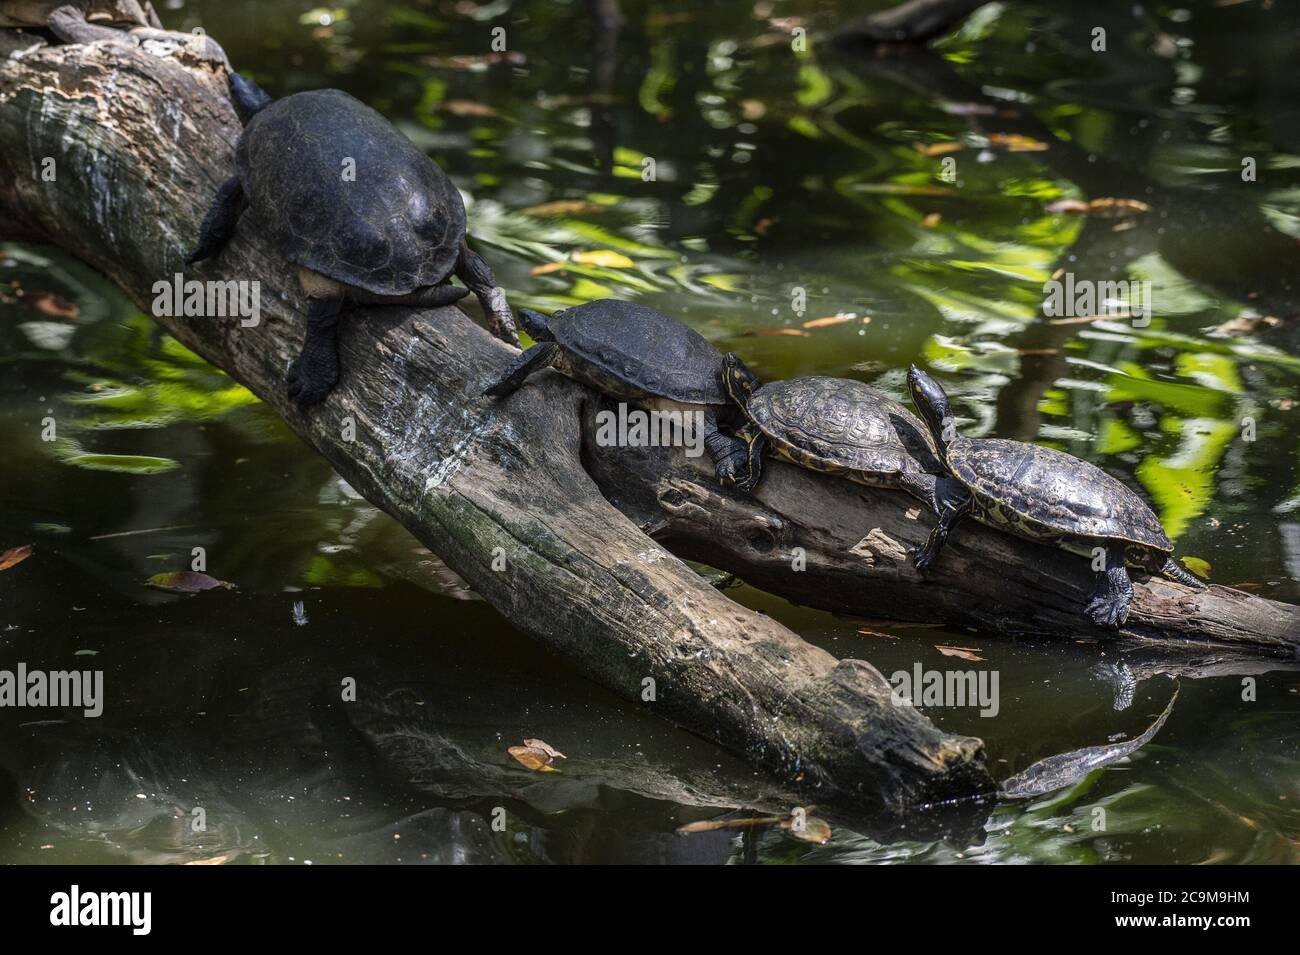 Black wood turtle or black river turtle, Rhinoclemmys funerea, Geoemydidae, Costa Rica, Centroamerica Stock Photo